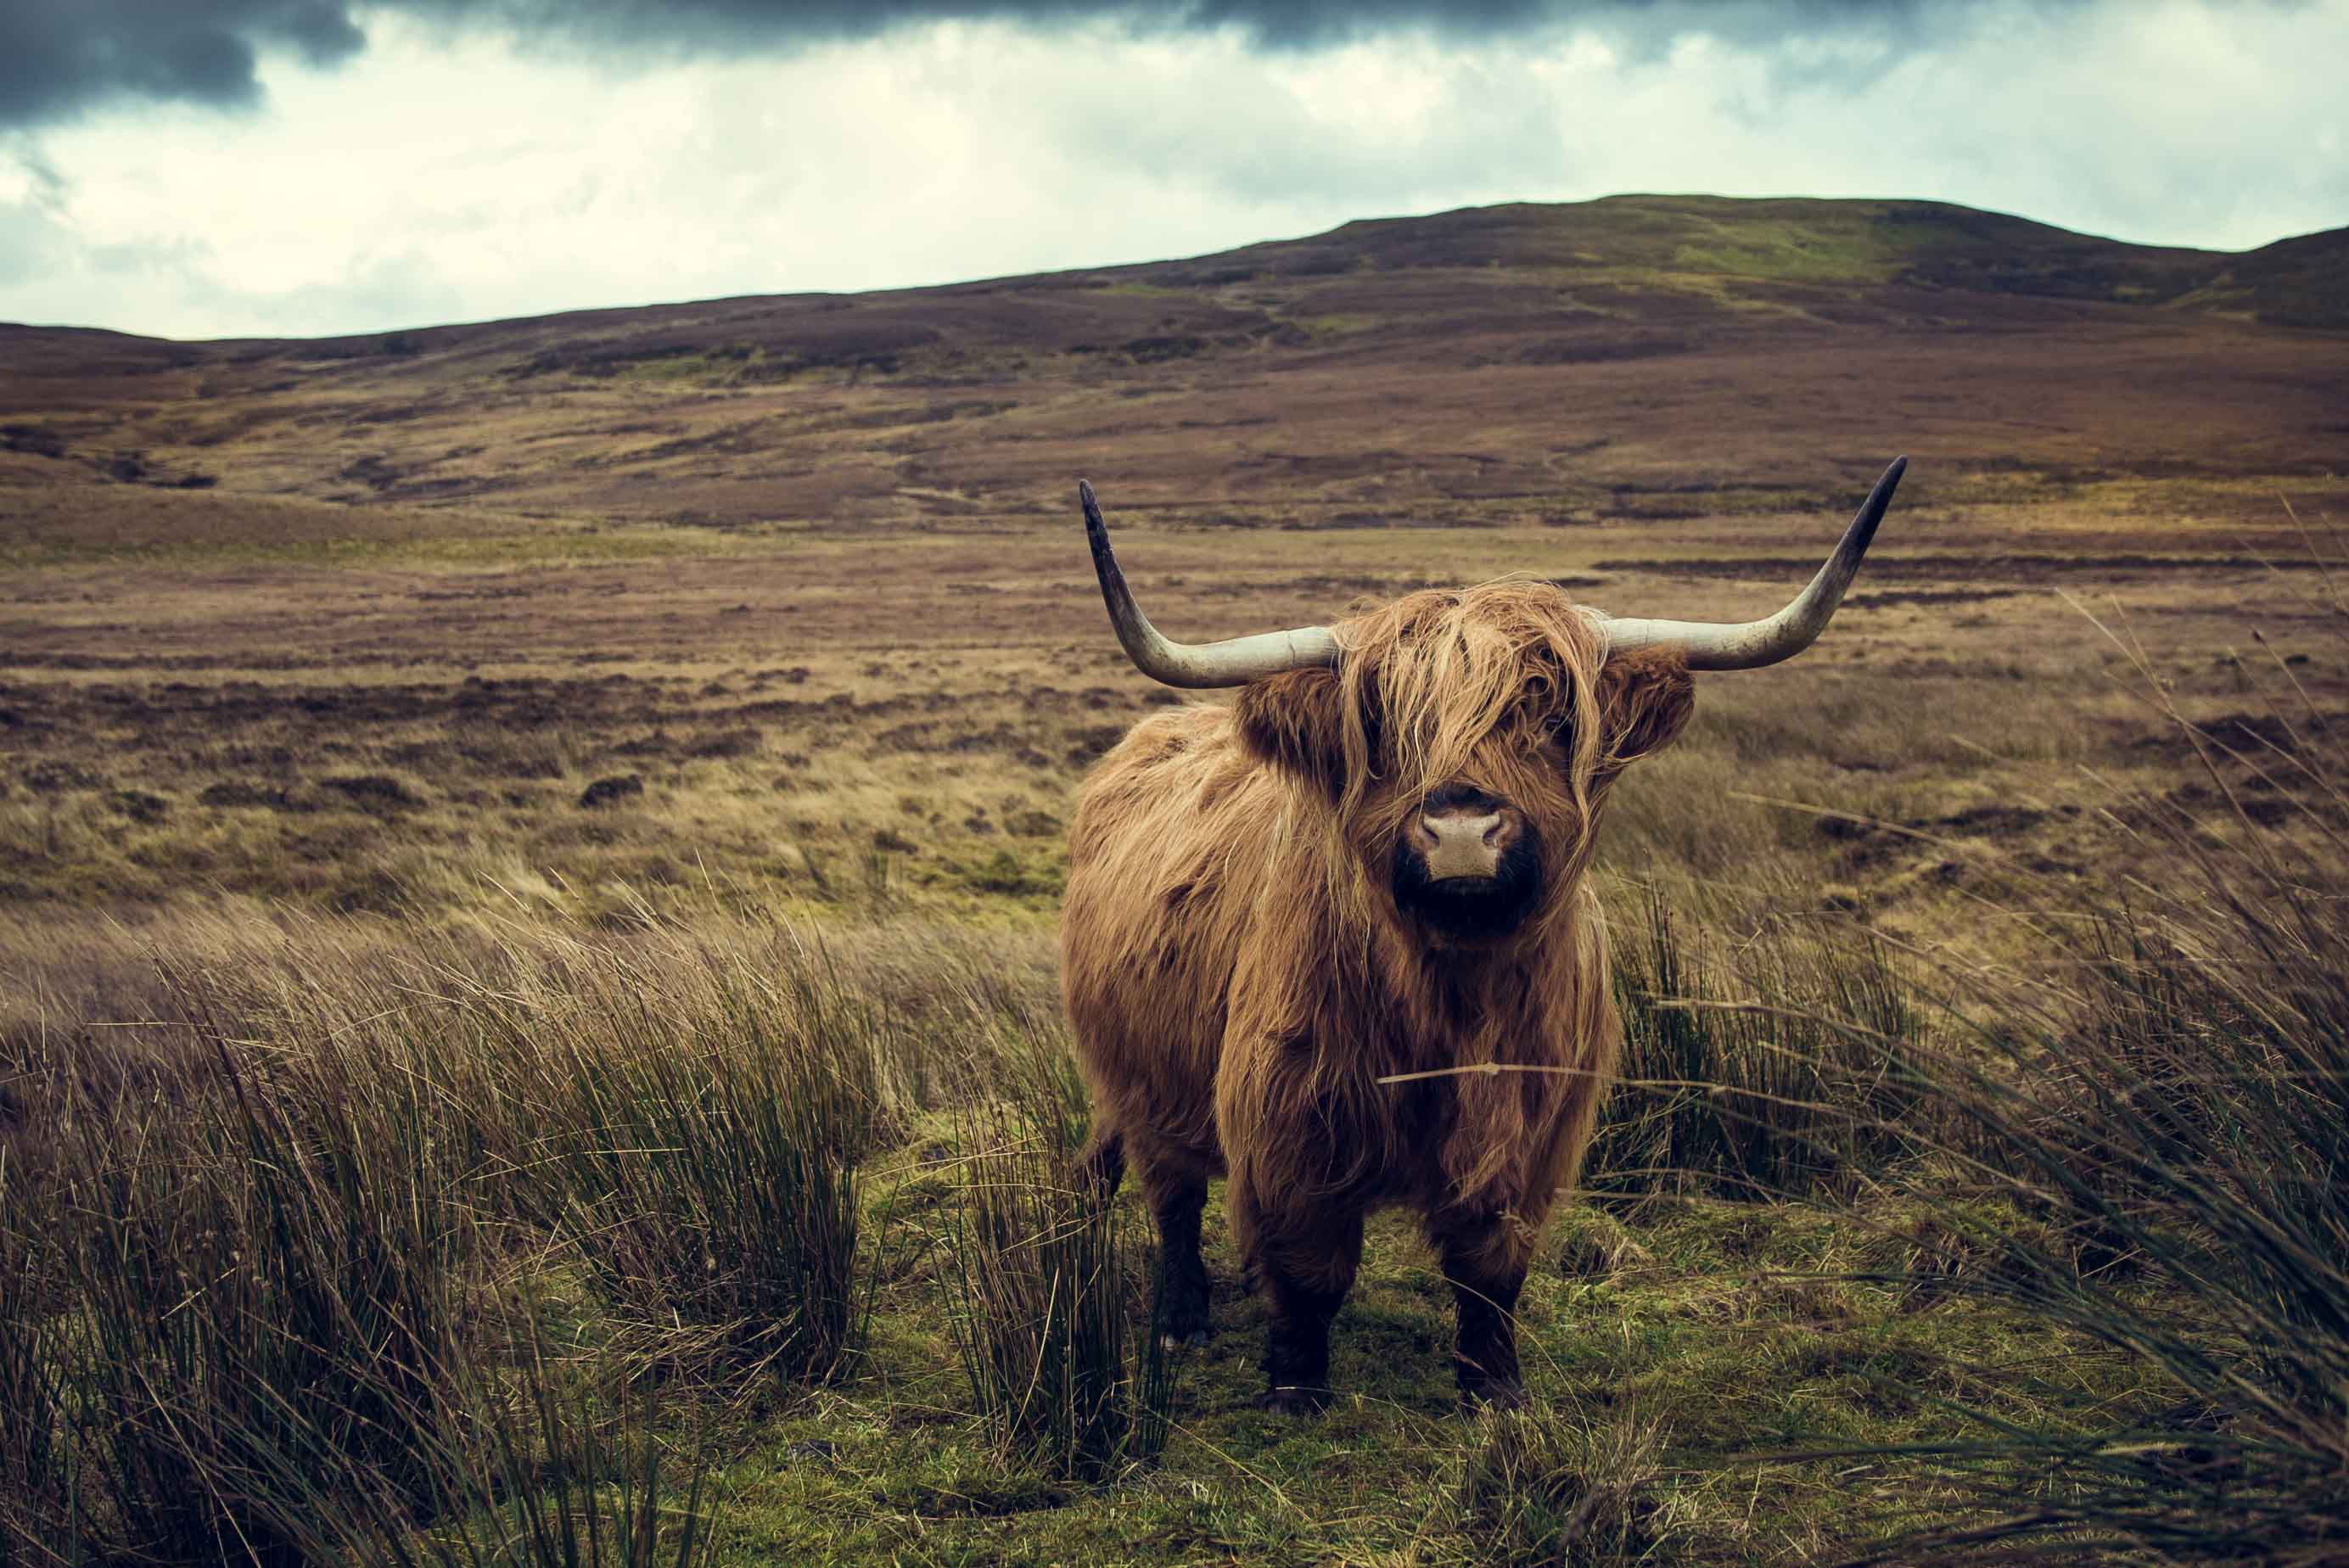 Écosse Ile de Skye montagne mer loch ness nessie taureau Scotland Inverness bull